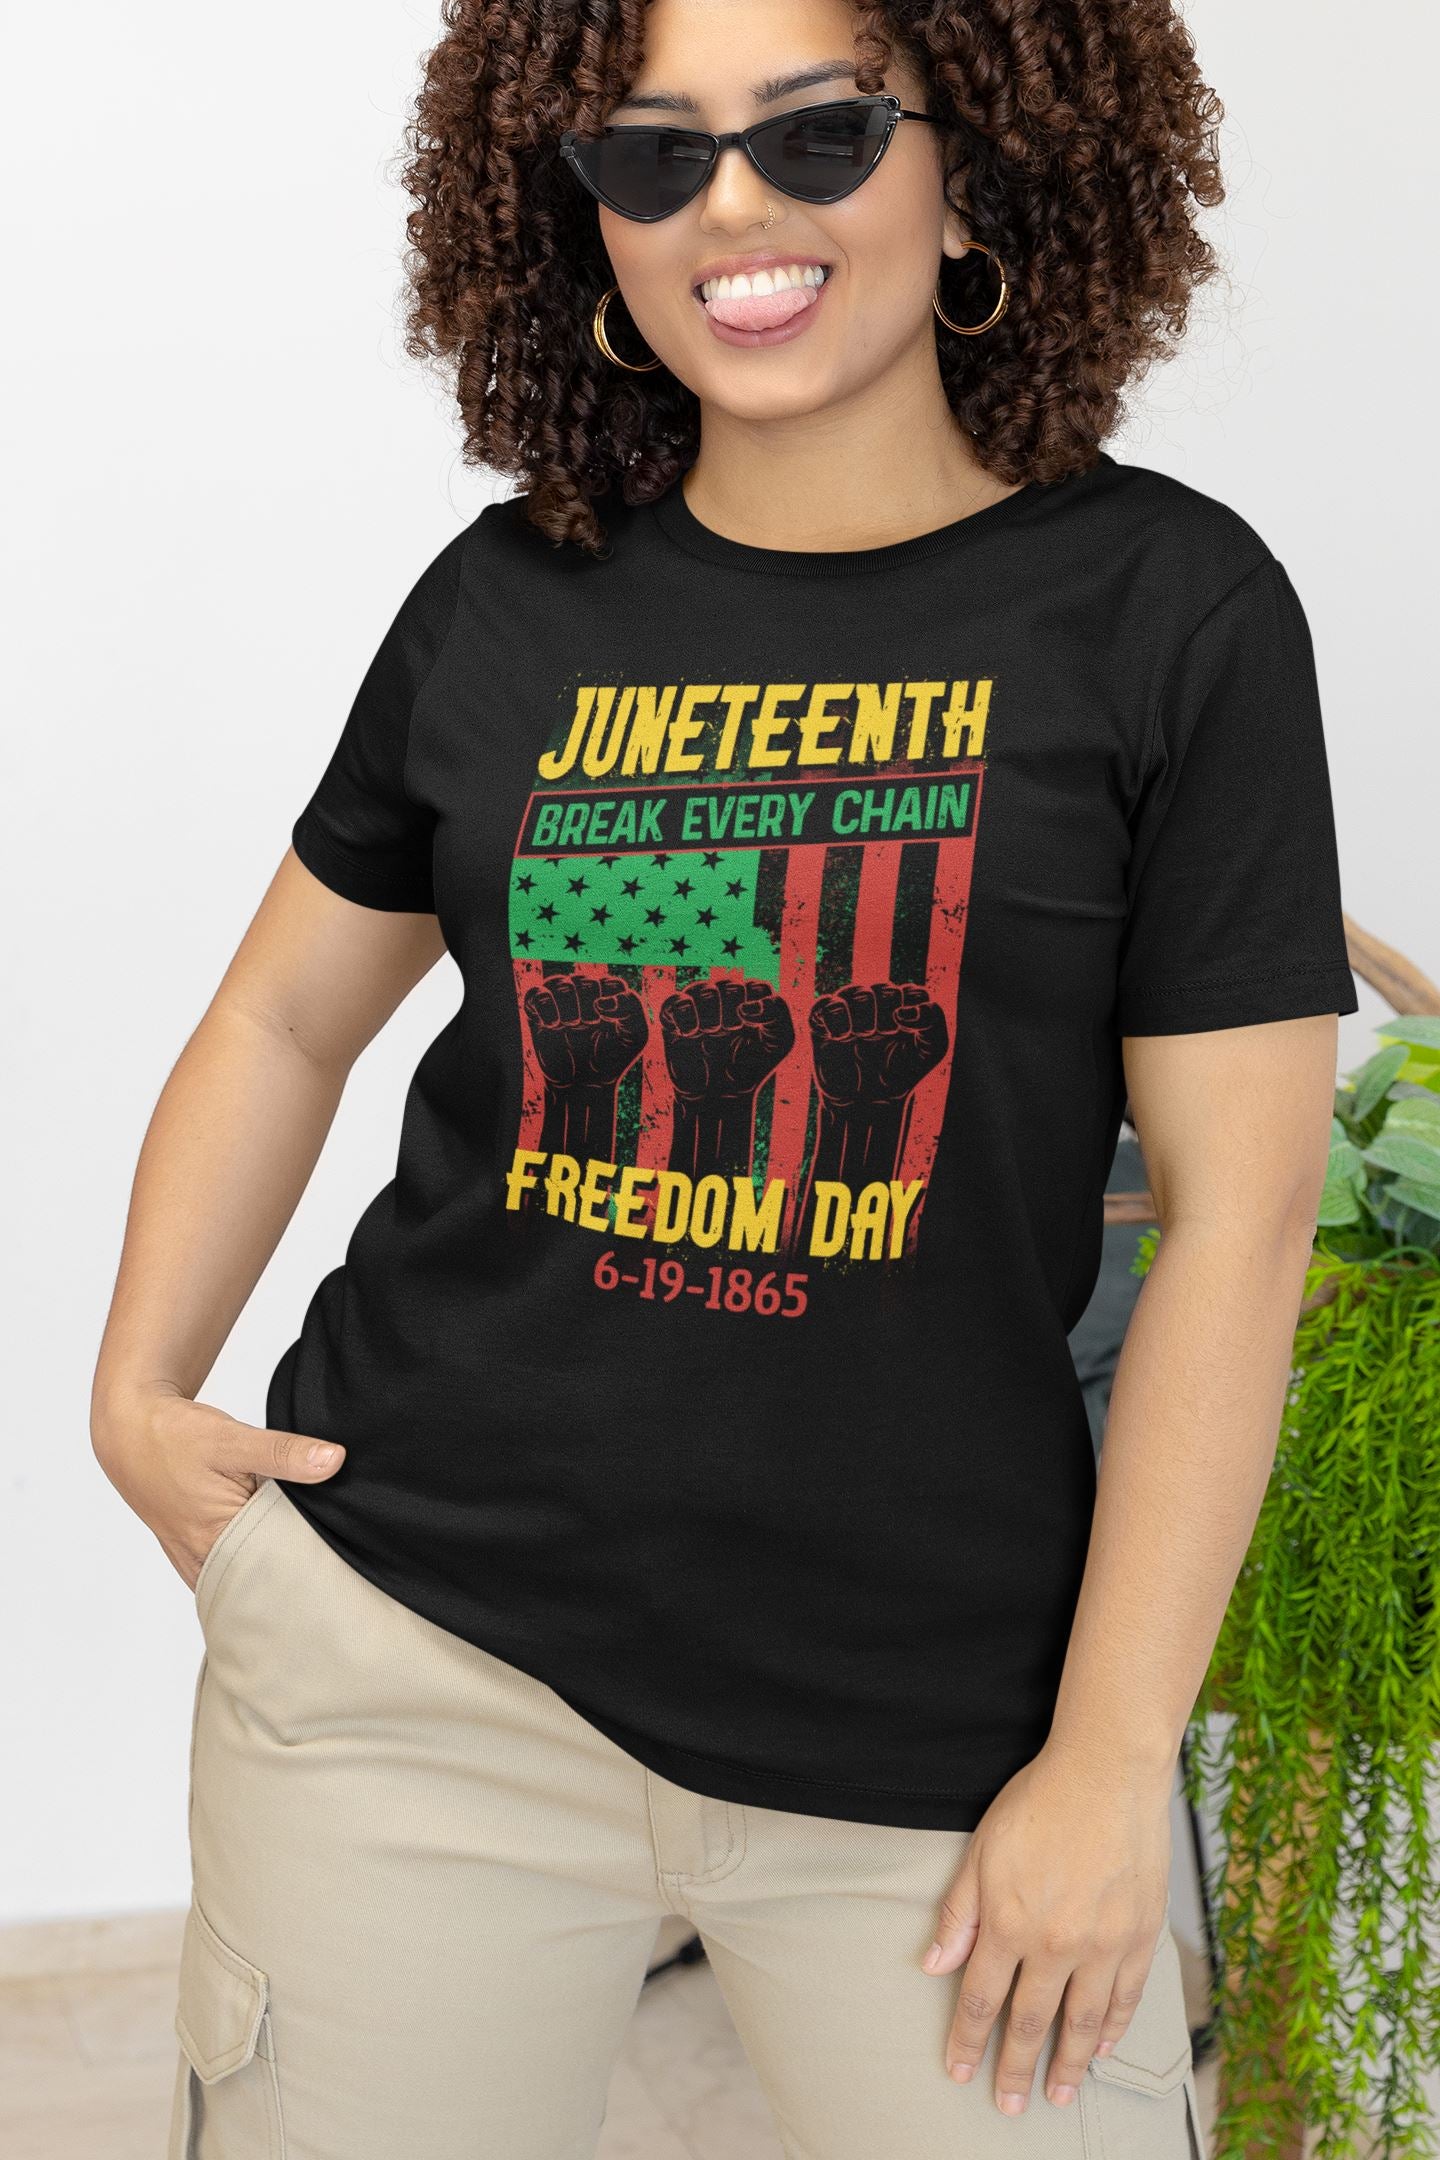 Juneteenth Freedom Day 1 T-Shirt Apparel Gearment 